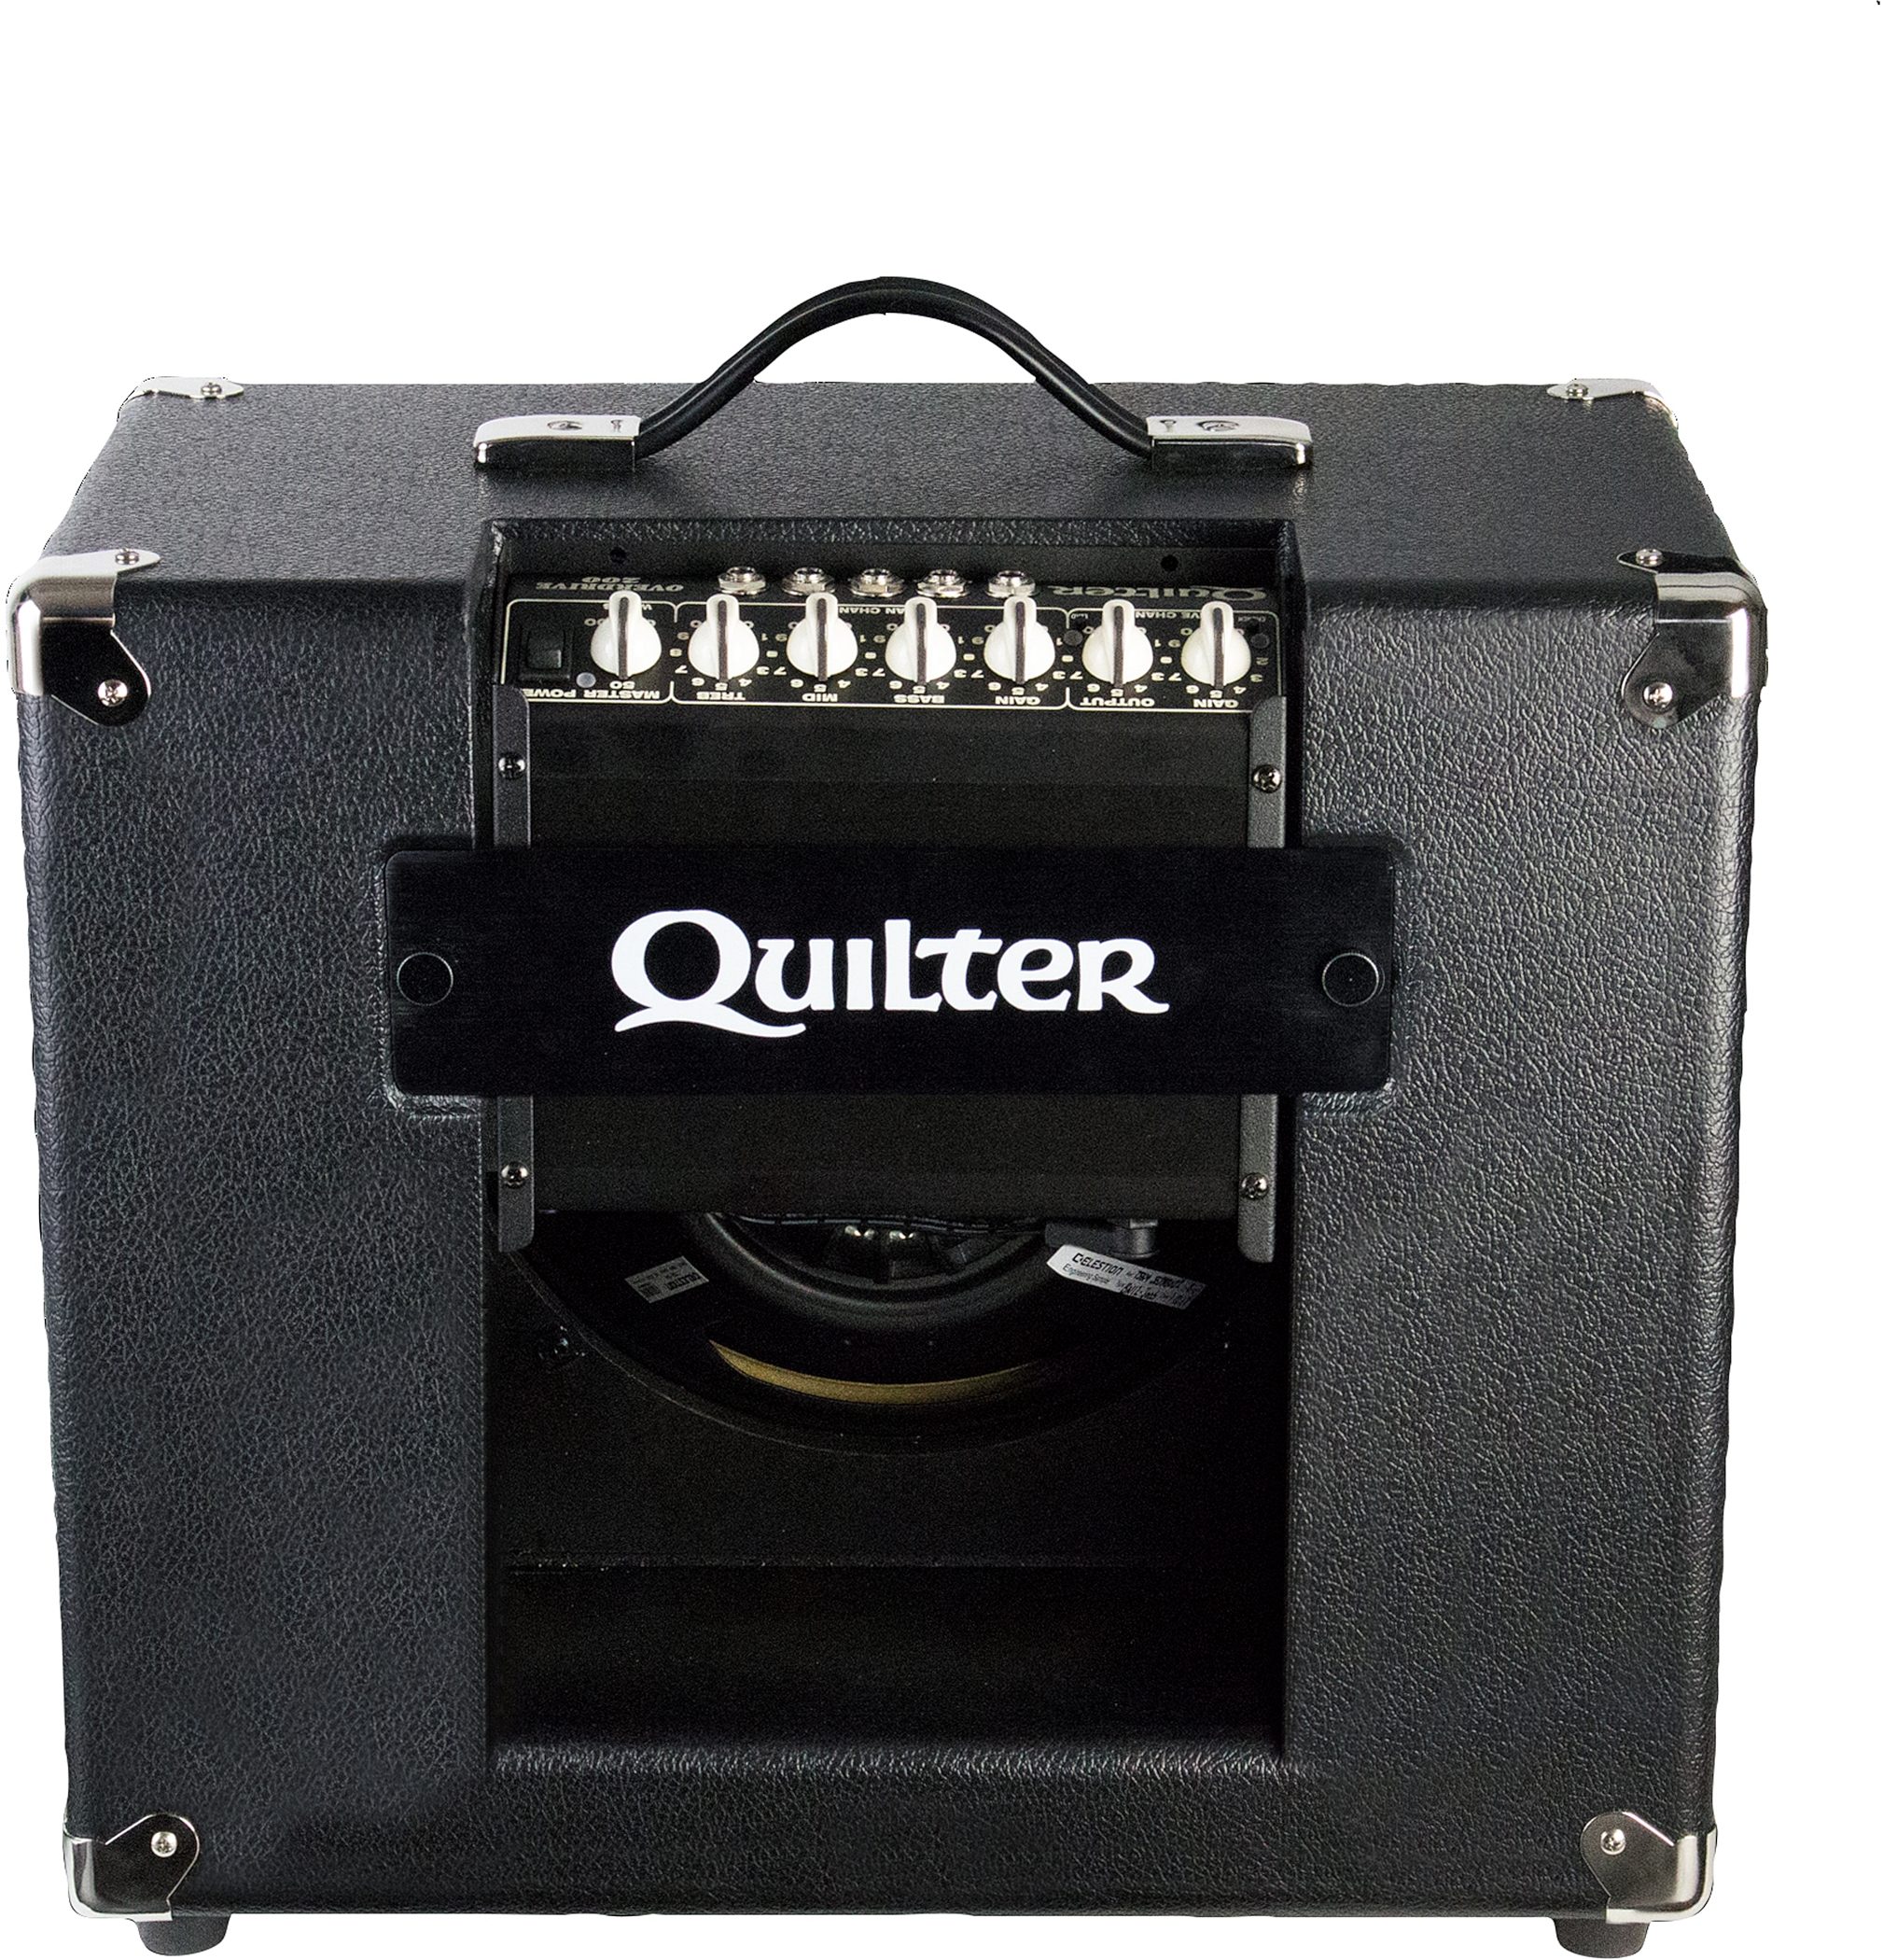 Quilter Tone Block 202 + BLOCKDOCK 12 HD-